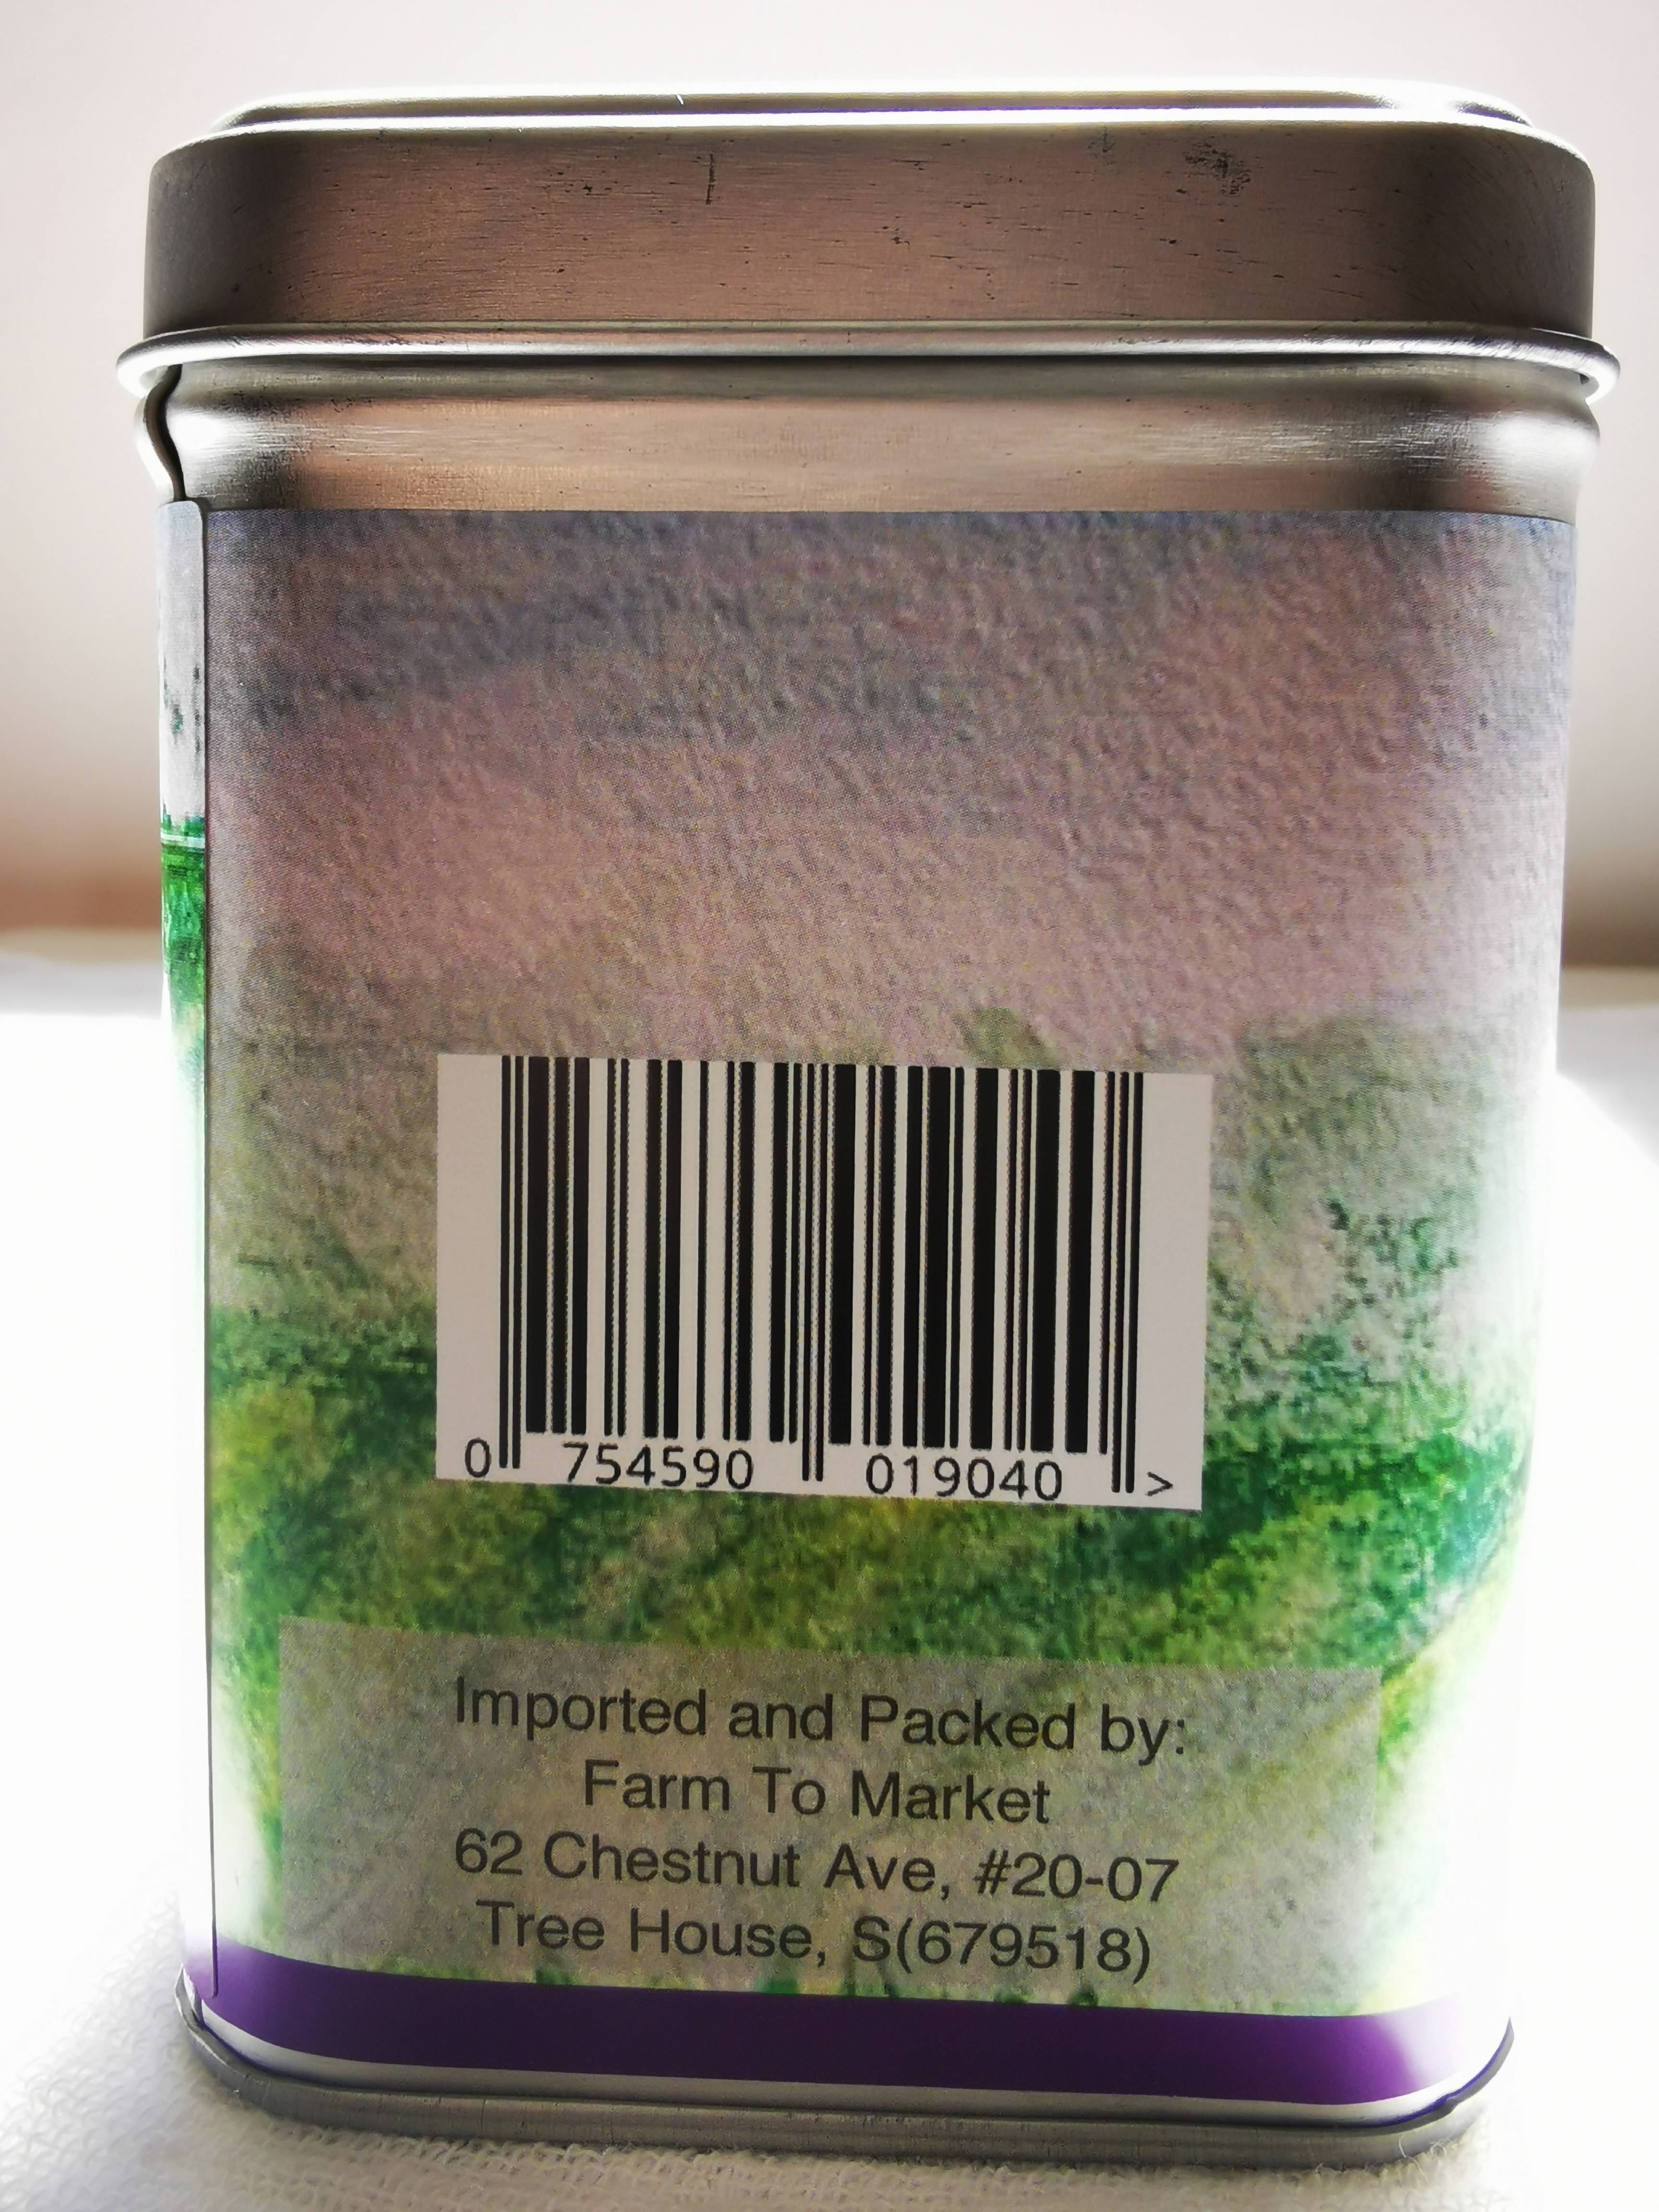 Earl Grey Lavender Loose Leaf Tea Teas Farm To Market 